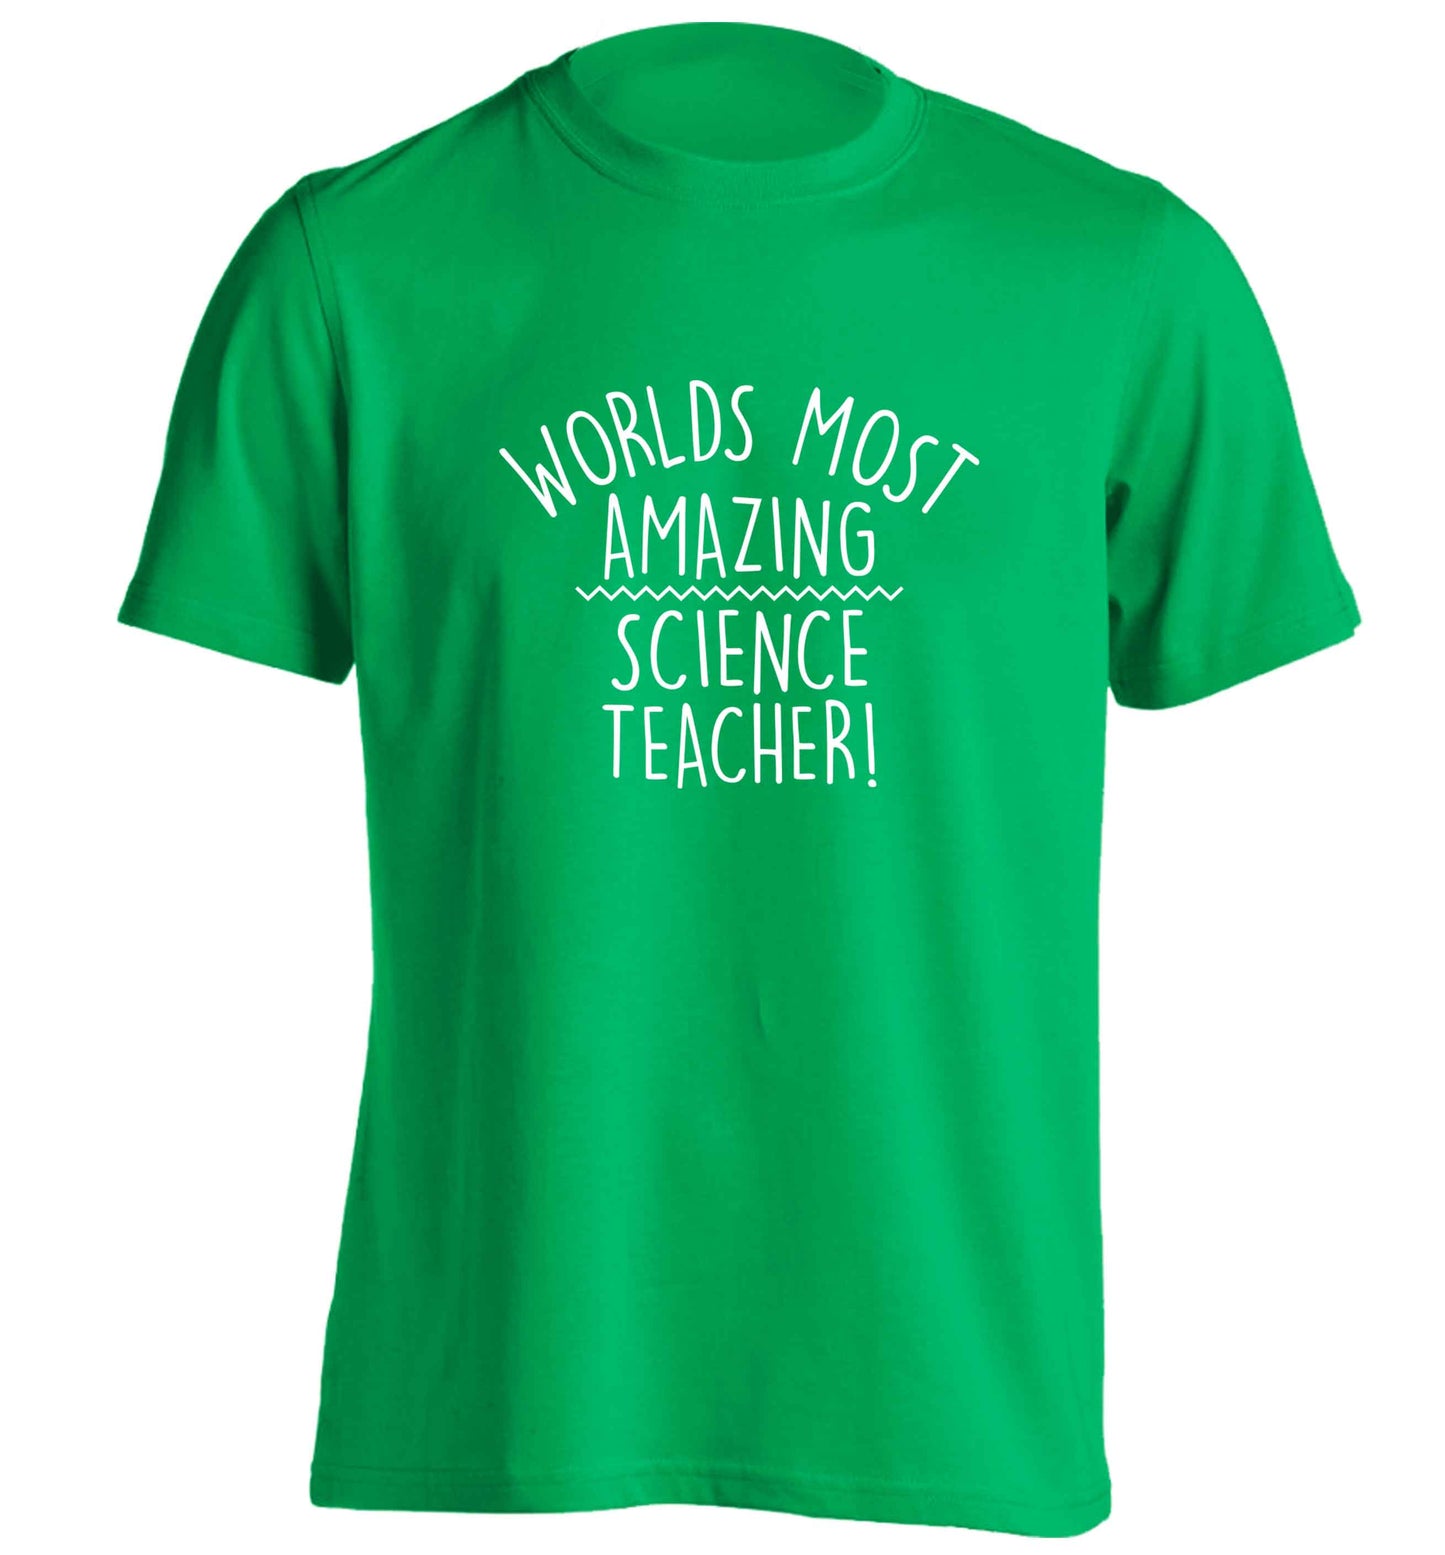 Worlds most amazing science teacher adults unisex green Tshirt 2XL